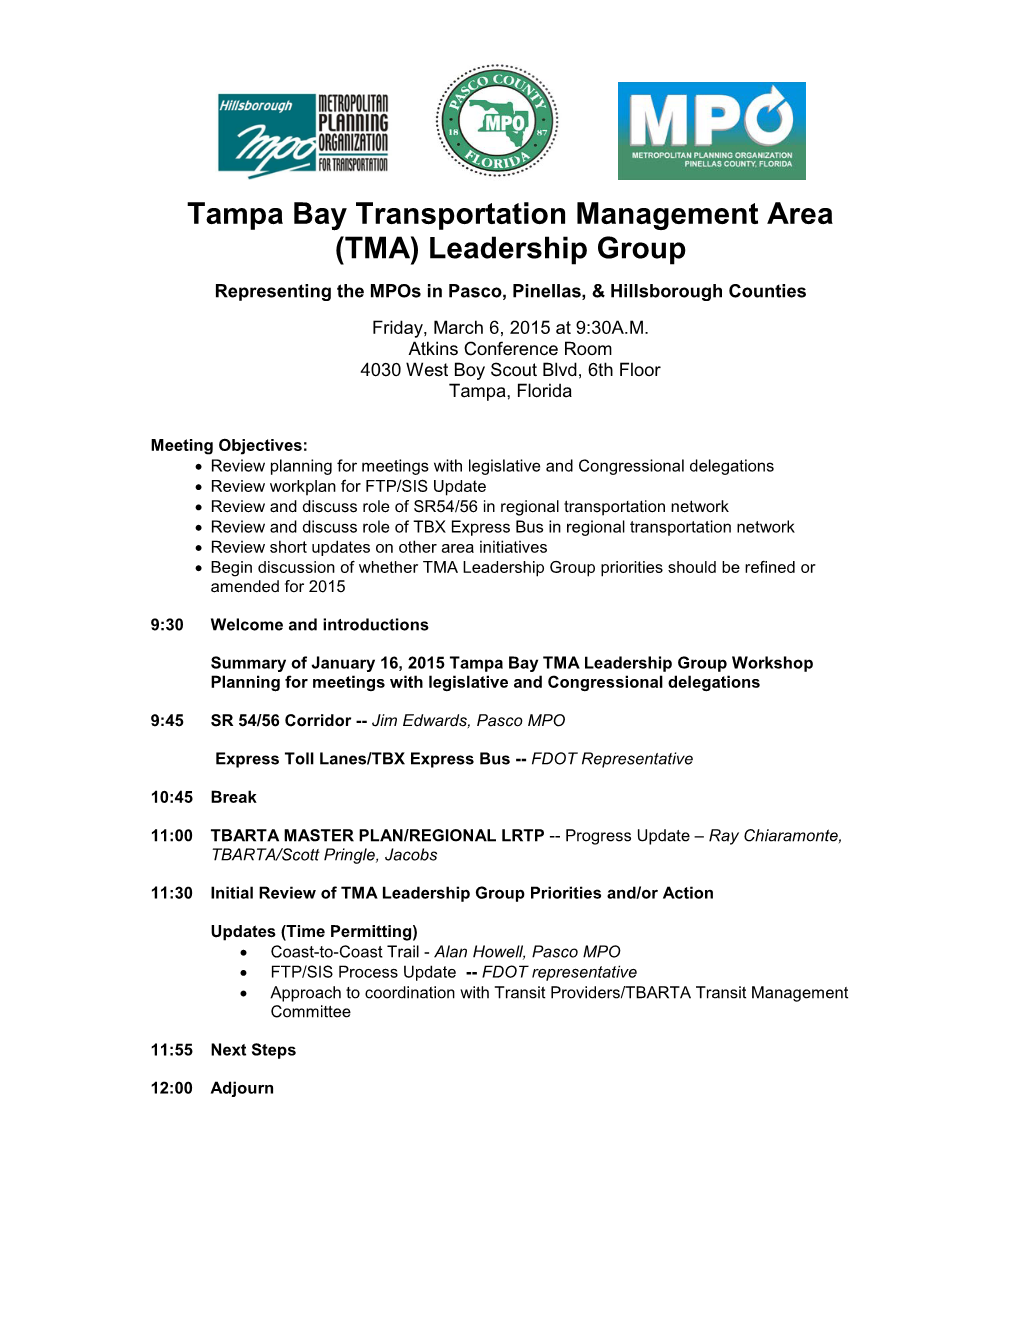 Tampa Bay Transportation Management Area (TMA) Leadership Group